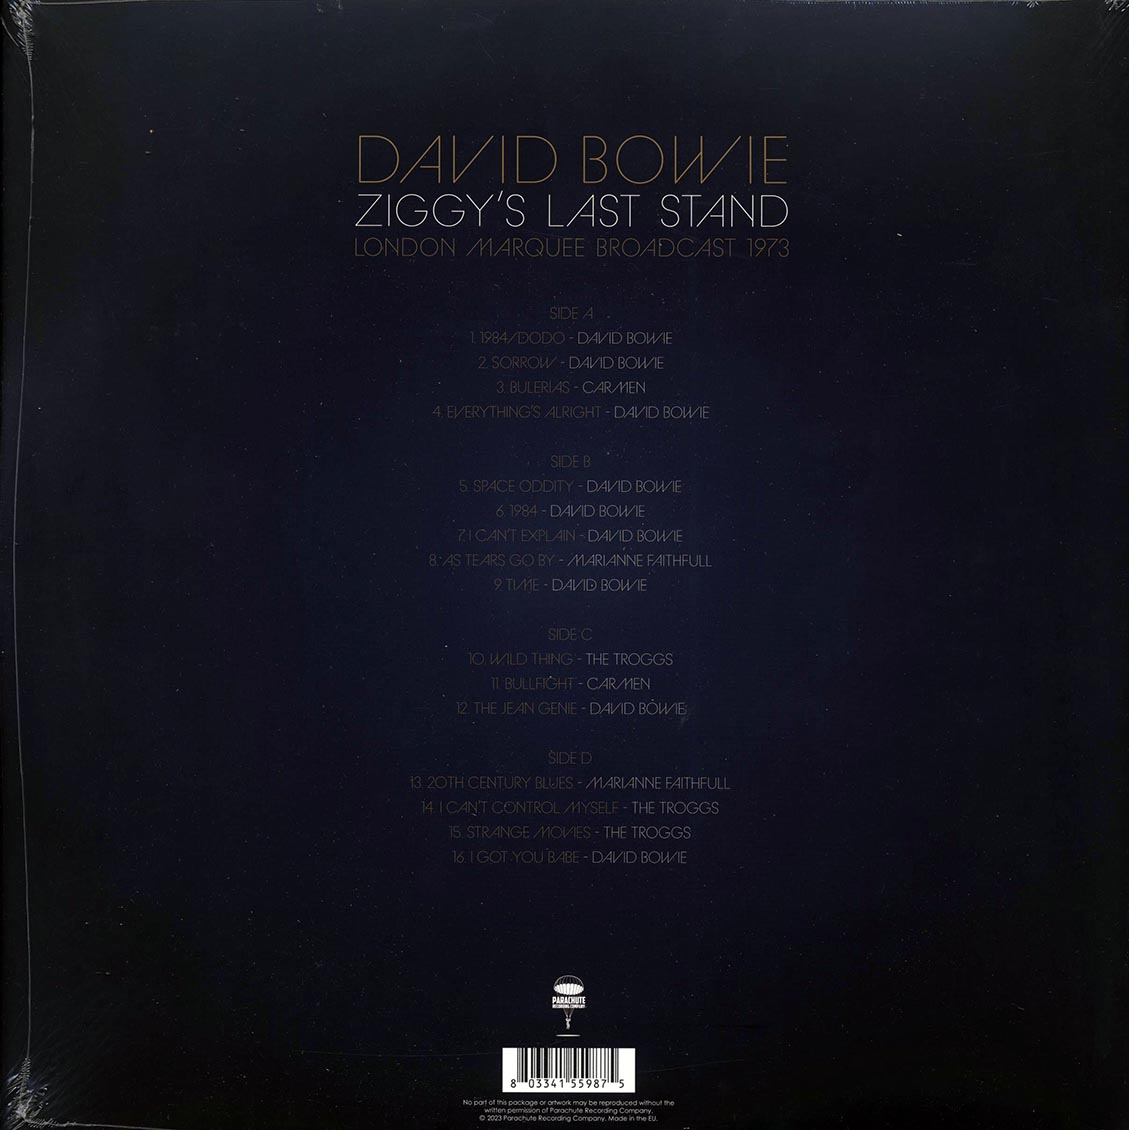 David Bowie - Ziggy's Last Stand: London Marquee Broadcast 1973 (2xLP) - Vinyl LP, LP